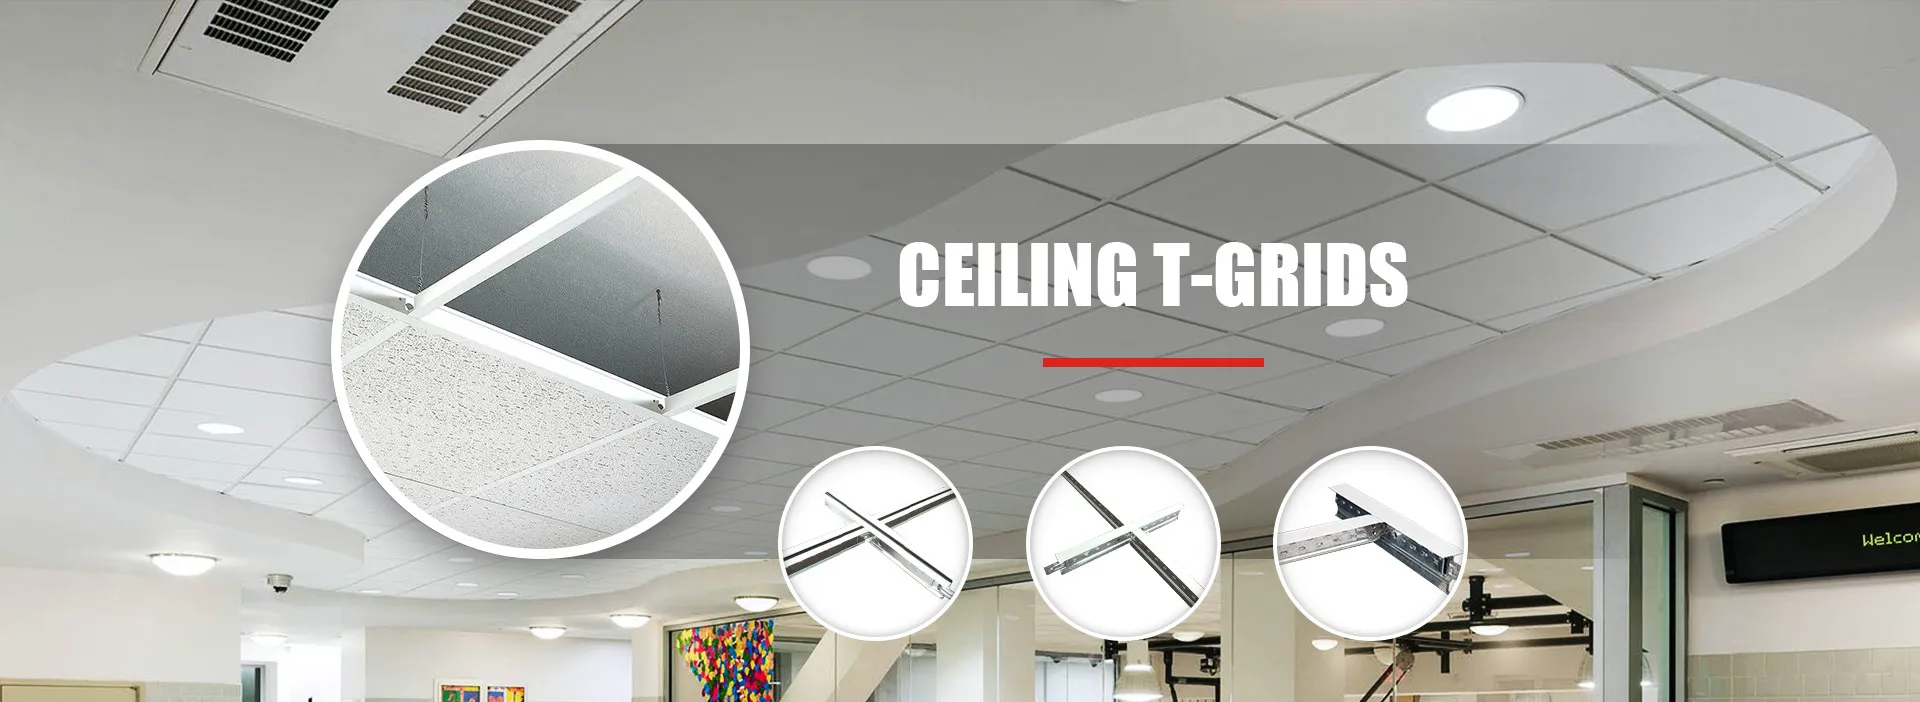 Ceiling T-Grids